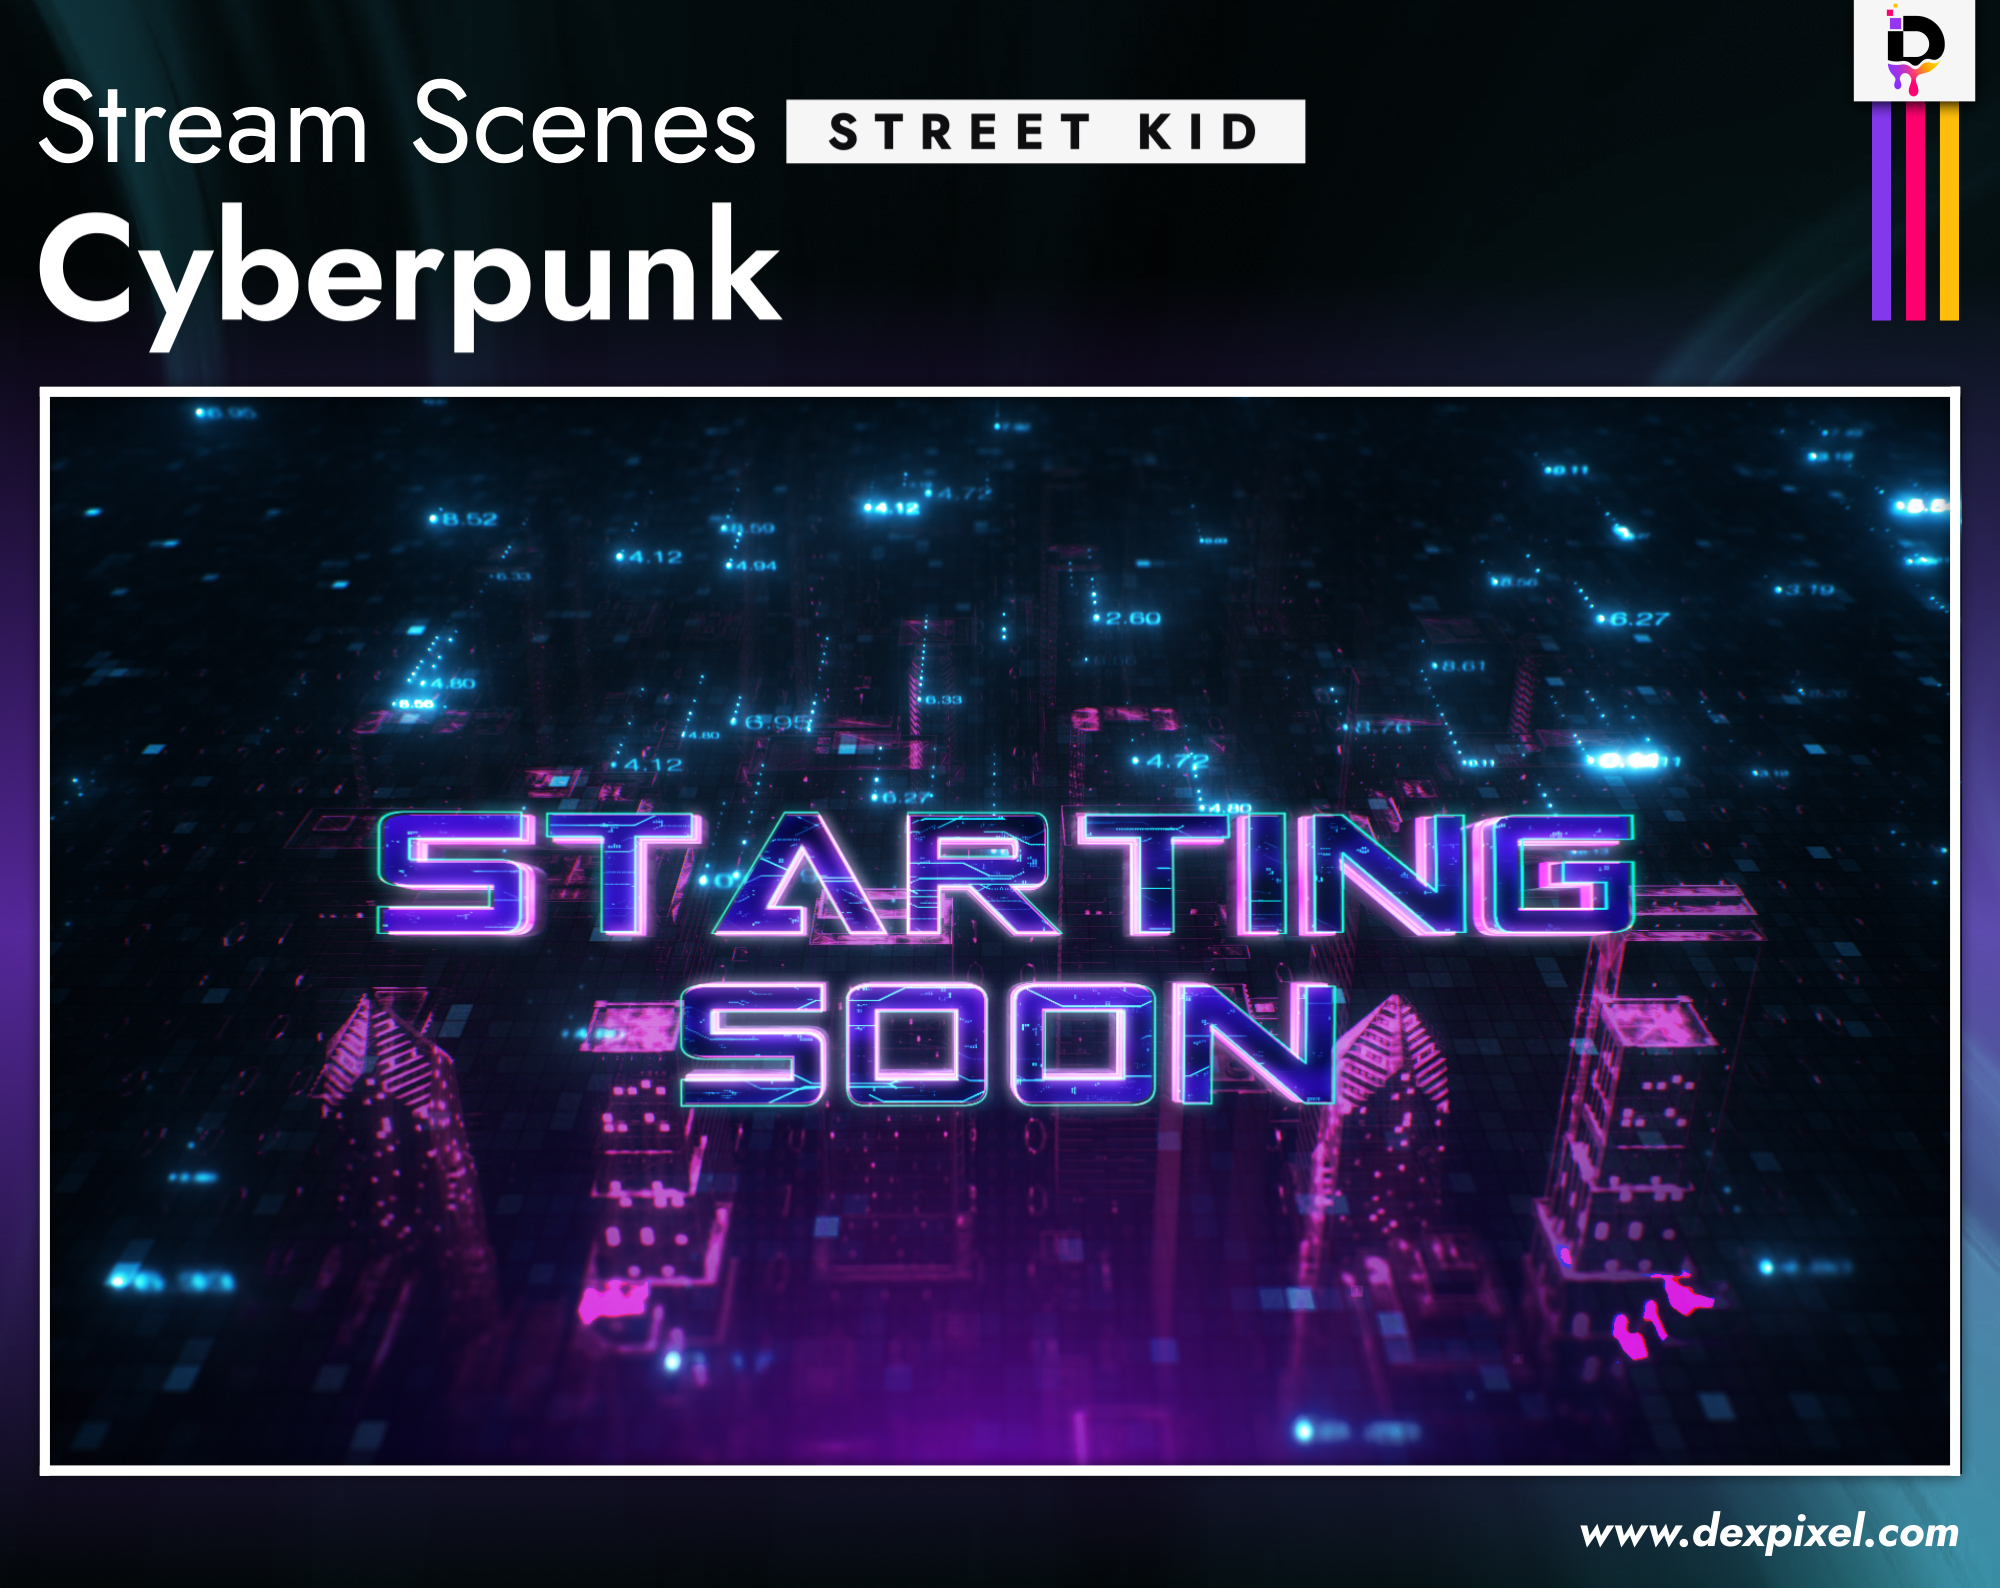 Stream Scenes Dexpixel Cyberpunk Street Kid